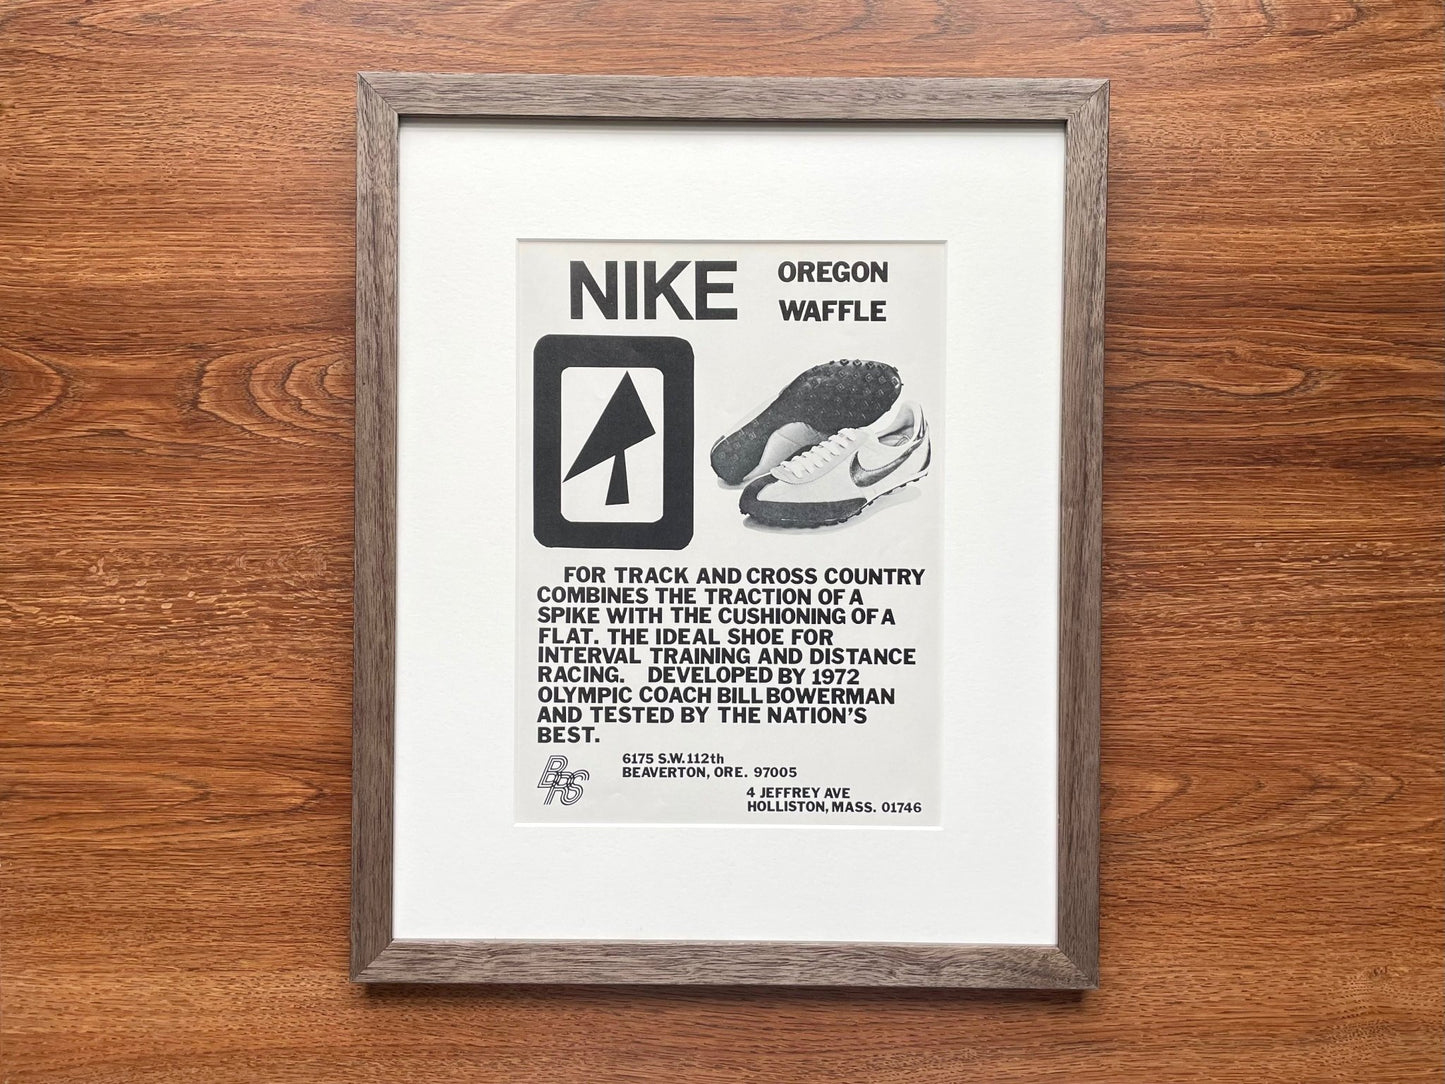 1975 Nike "Oregon Waffle" Advertisement in Grey Wood Frame